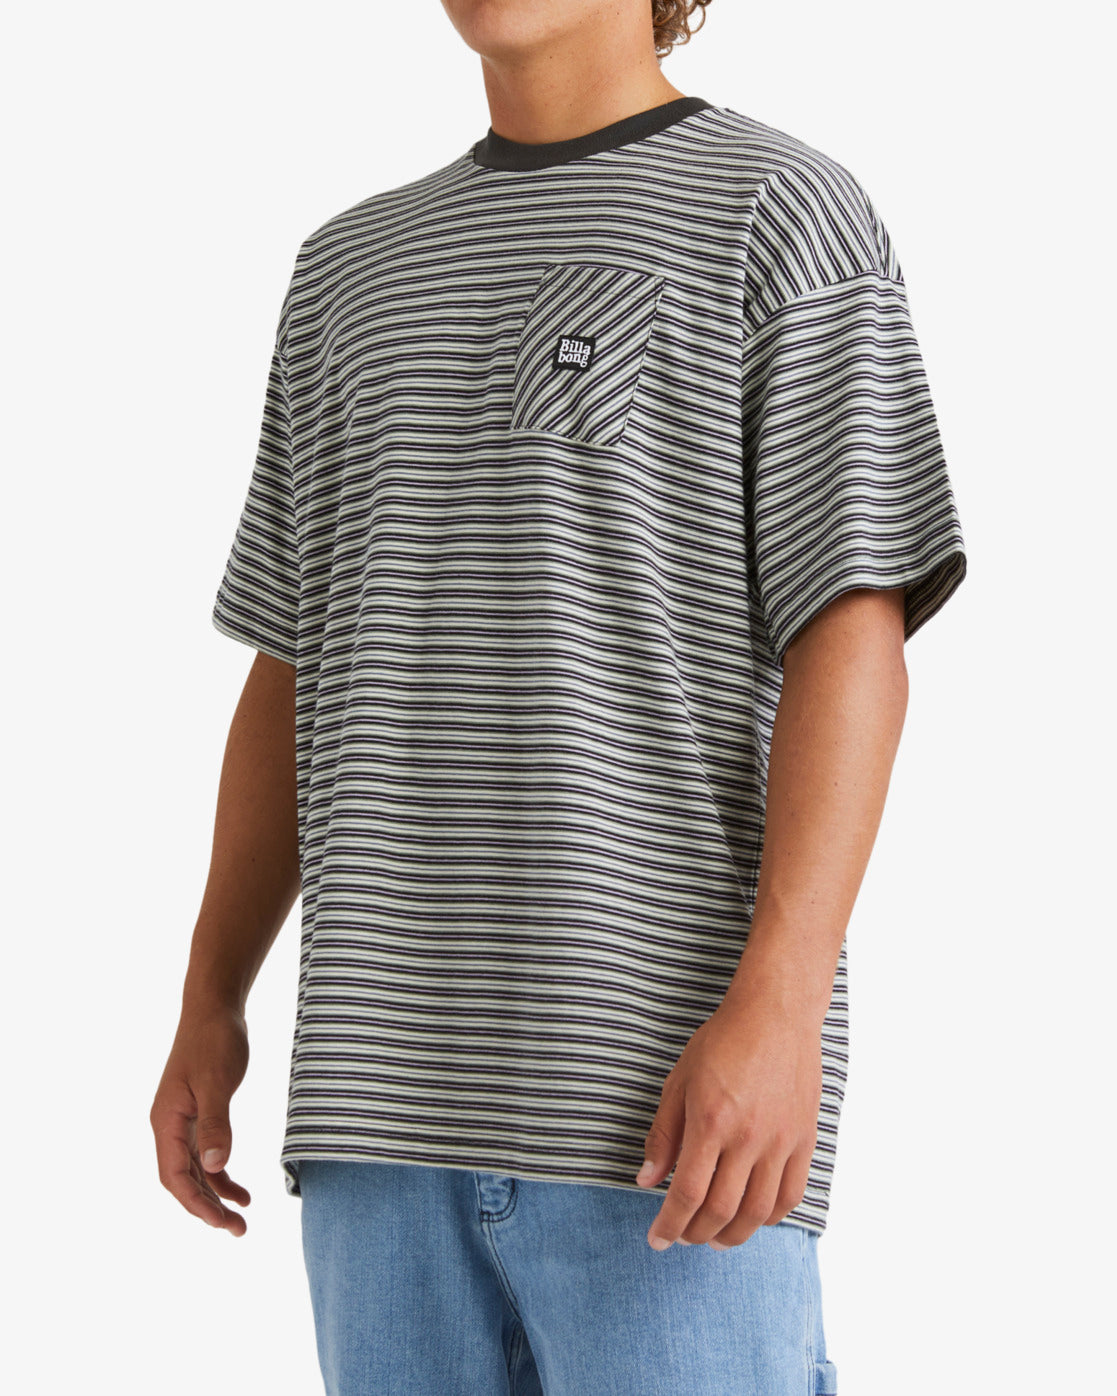 Absense Stripe T-Shirt